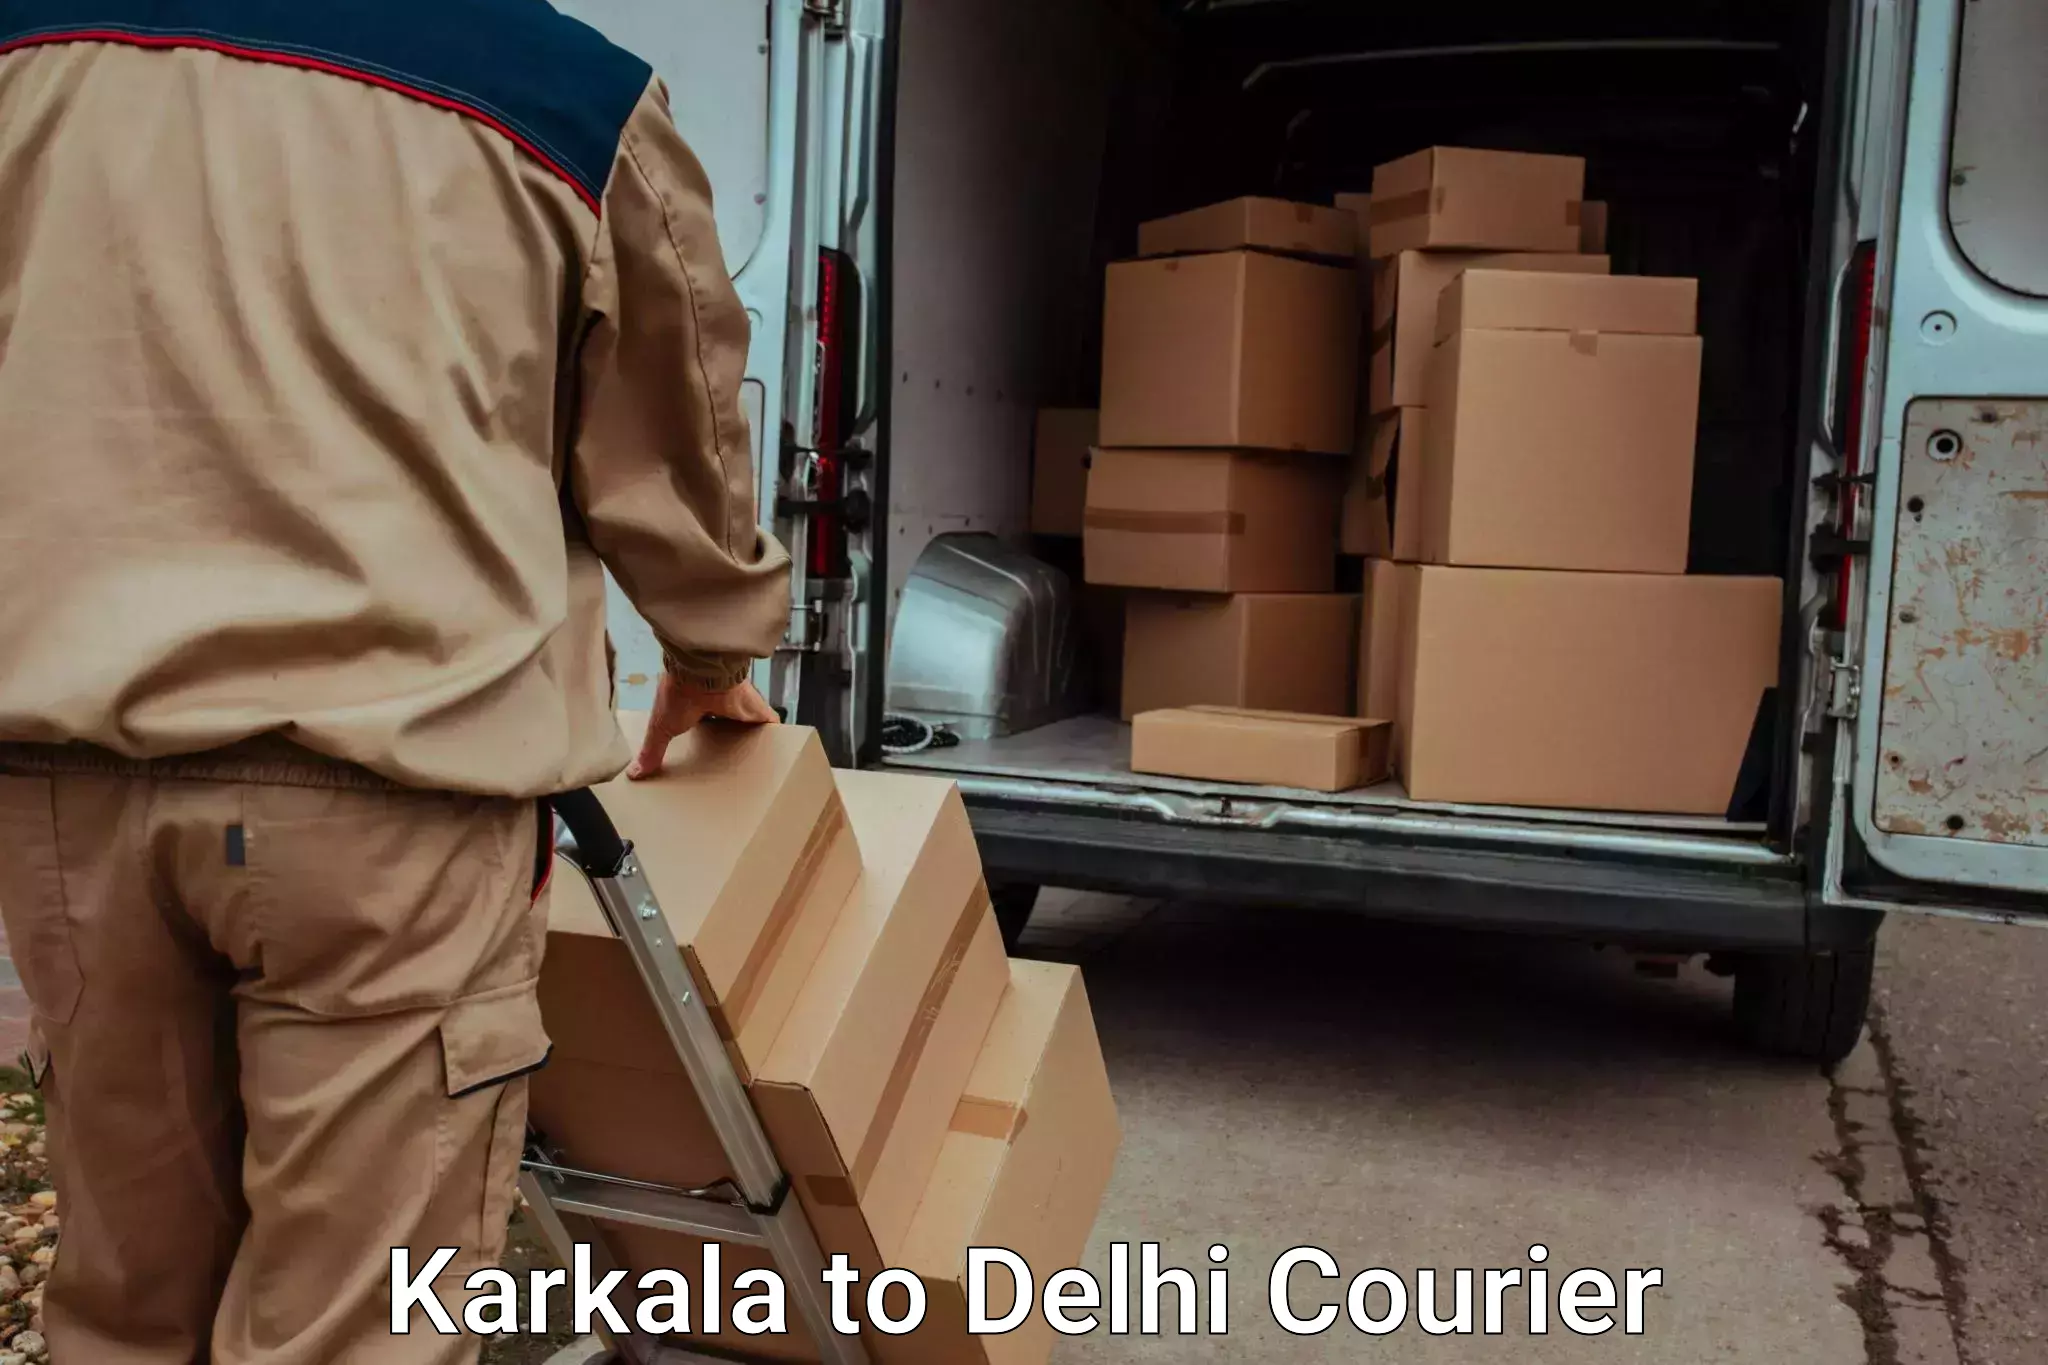 Same day luggage service Karkala to East Delhi